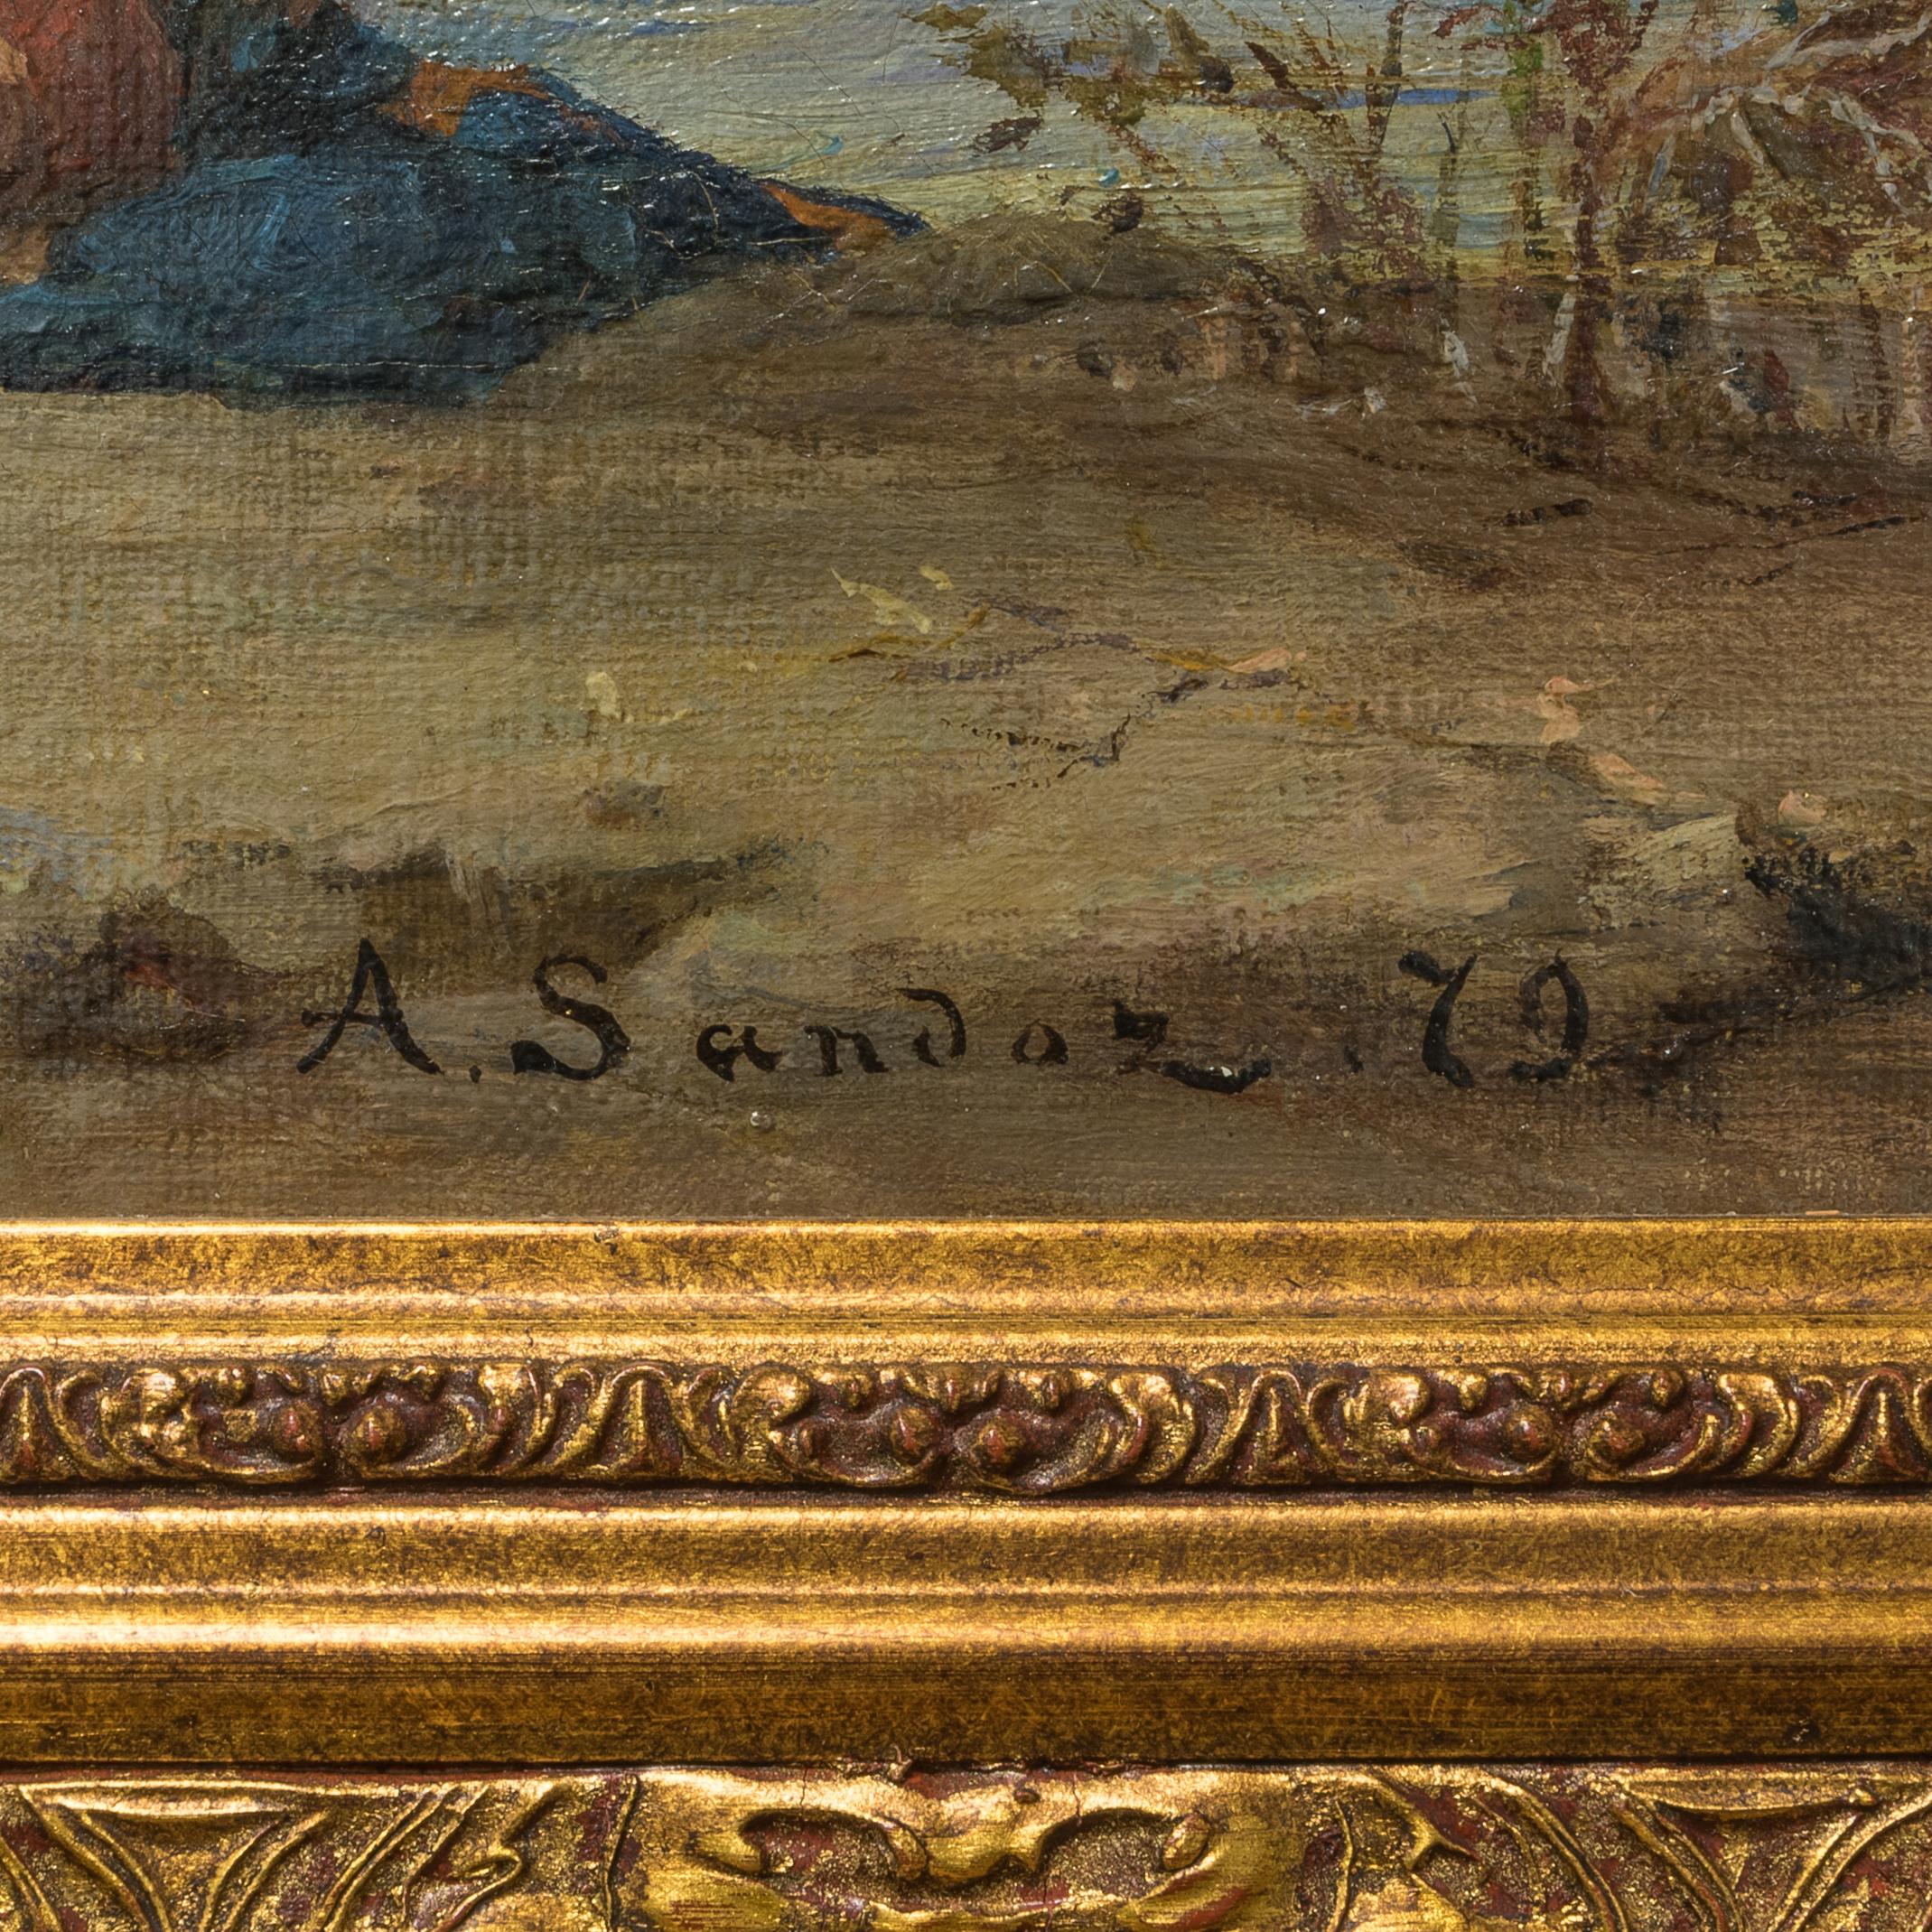 ADOLF KAROL SANDOZ
Polish, b. circa 1845

At the Oasis

Signed 'A. Sandoz .79'  

Oil on canvas
16 1/4 x 24 1/4 inches 